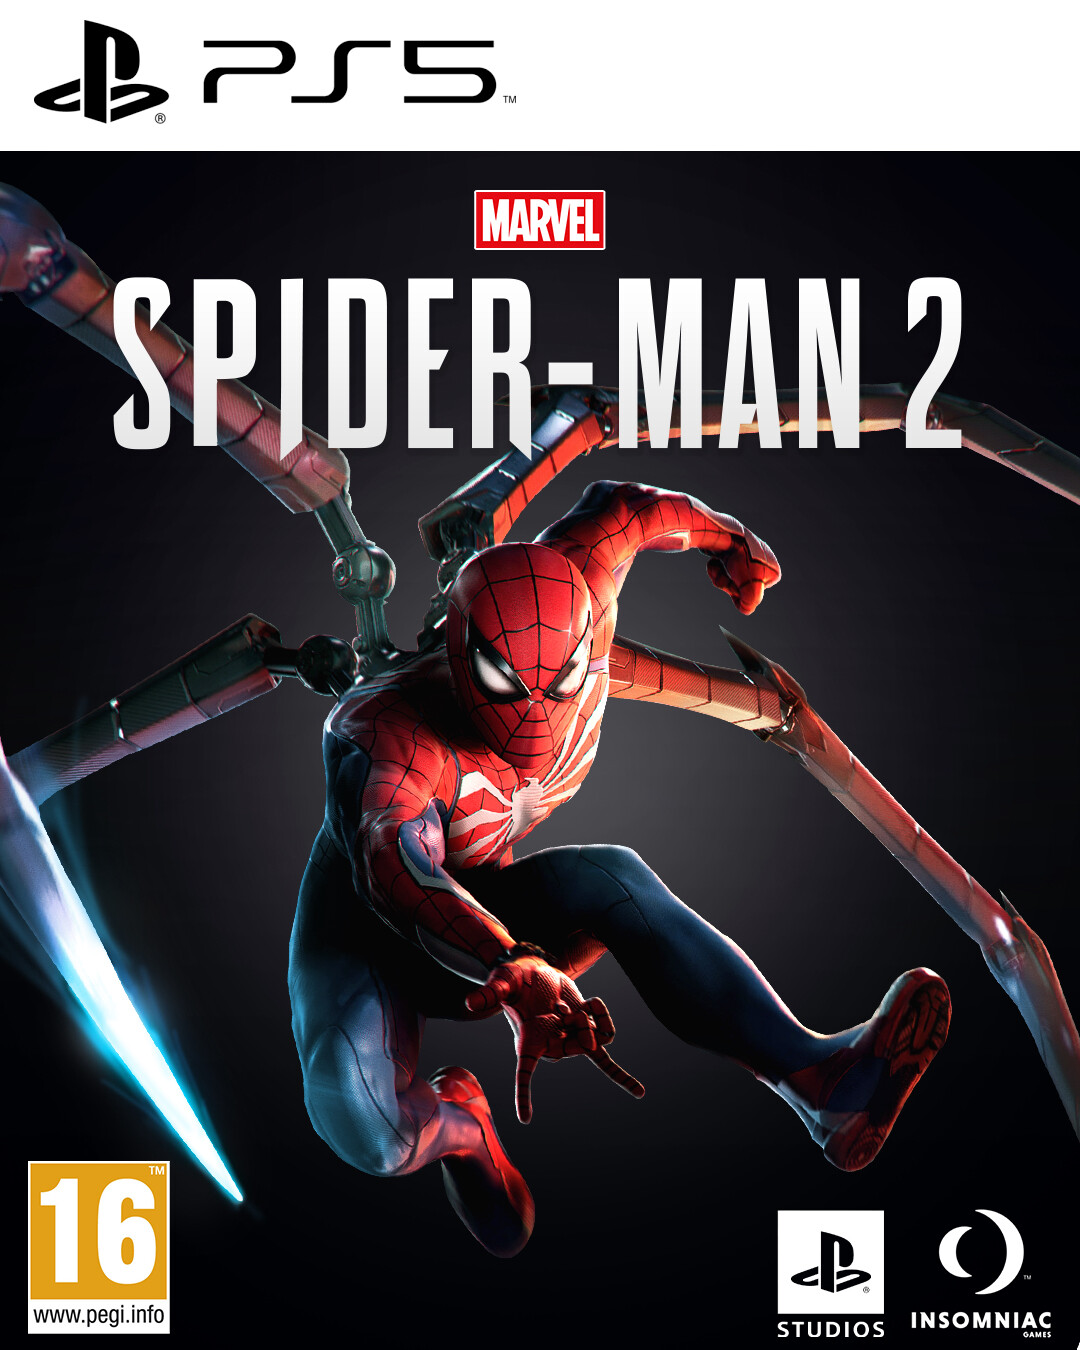 ArtStation - Spider-Man 2 ps5 cover